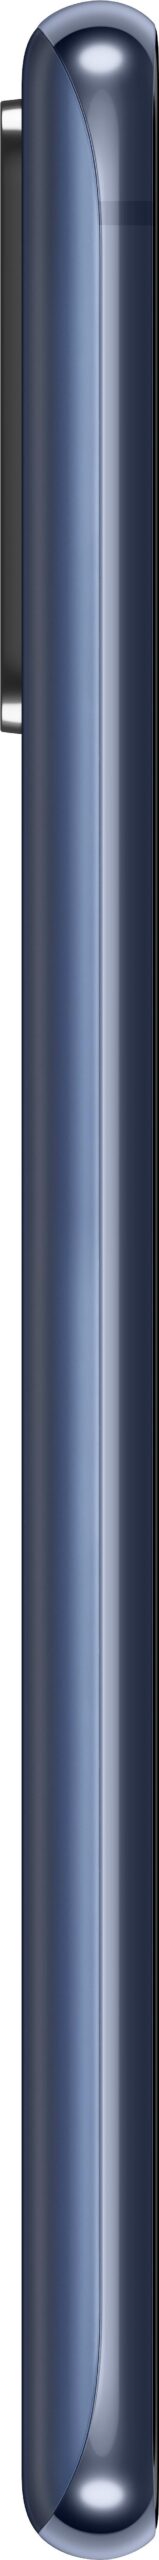 Samsung Galaxy S20 FE - Smartphone - Dual-SIM - 4G LTE - 128GB - microSD slot - GSM - 6.5 - 2400 x 1080 Pixel (407 ppi (Pixel pro )) - Super AMOLED - RAM 6GB (32 MP Vorderkamera) - Triple-Kamera - Android - Cloud Navy (SM-G780FZBDEUB)